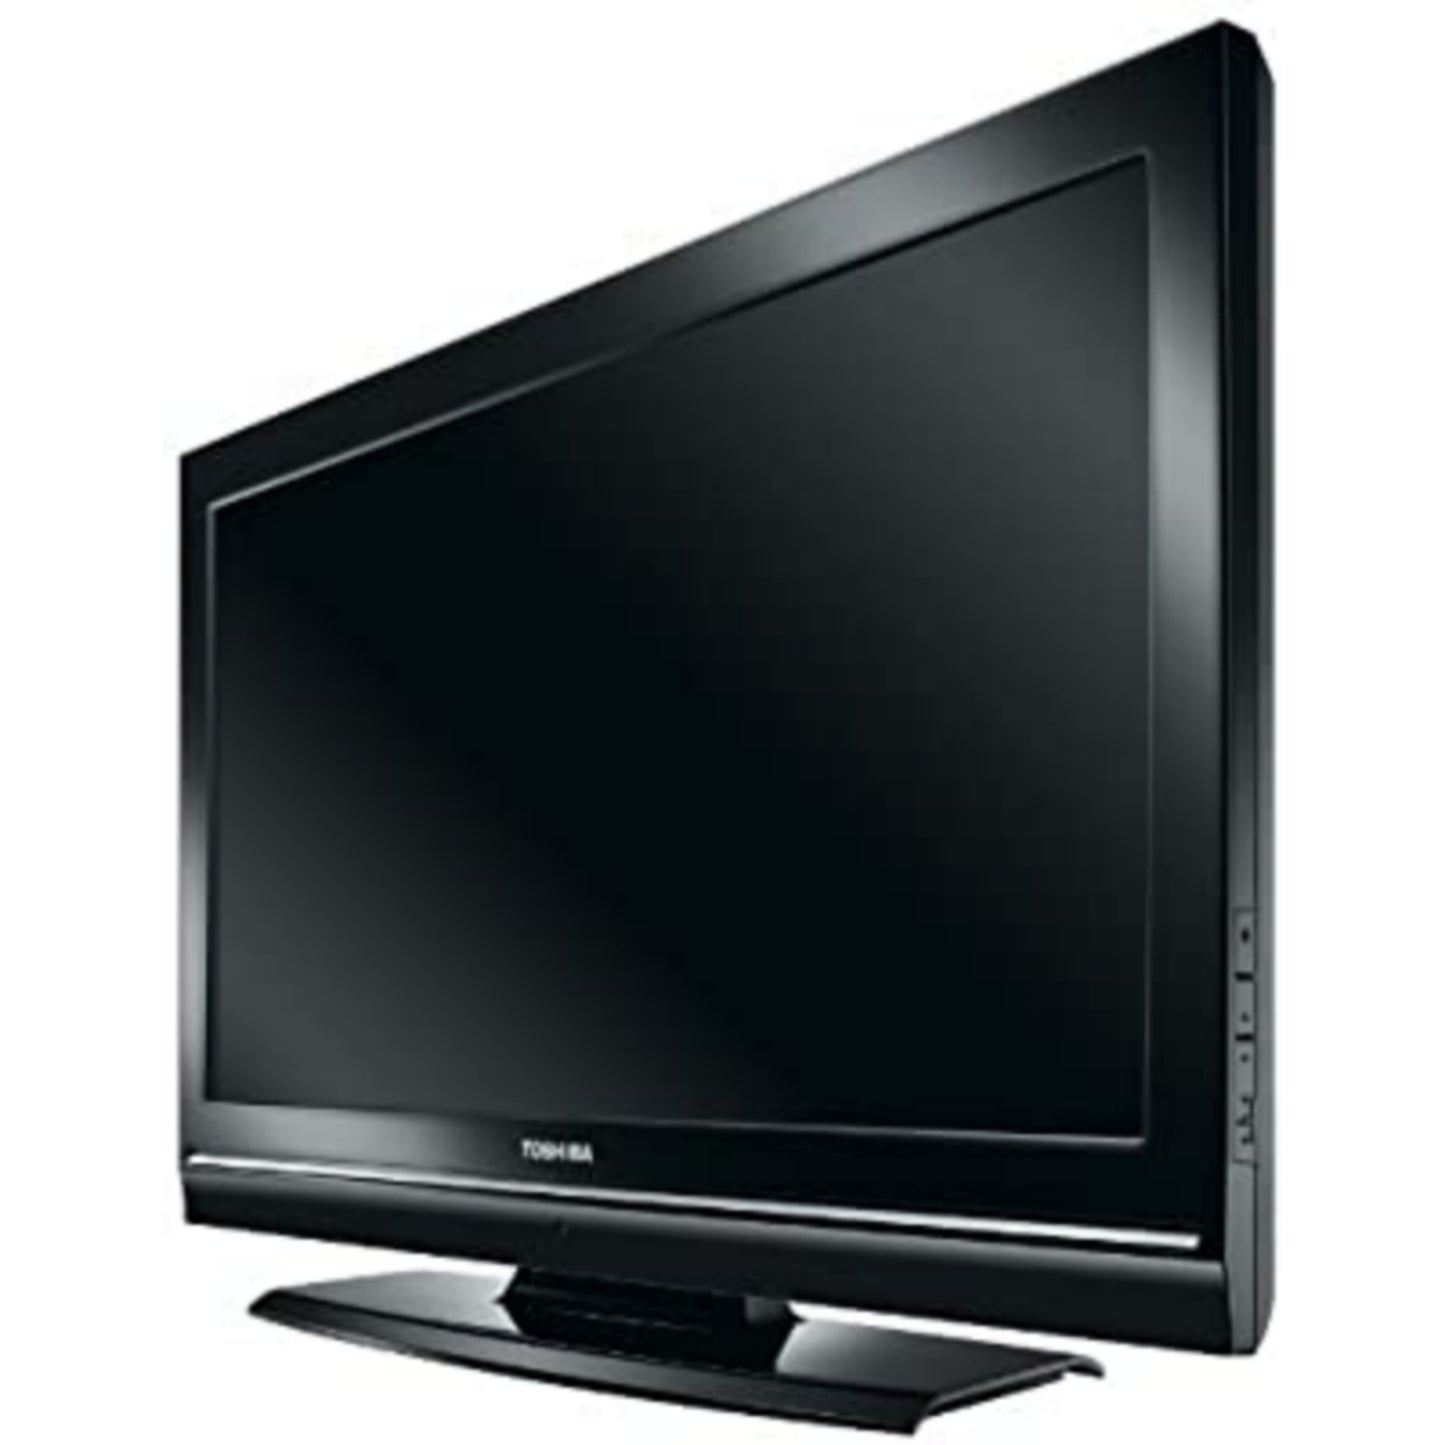 Toshiba 19 Inch Full HD LCD TV - UK Used